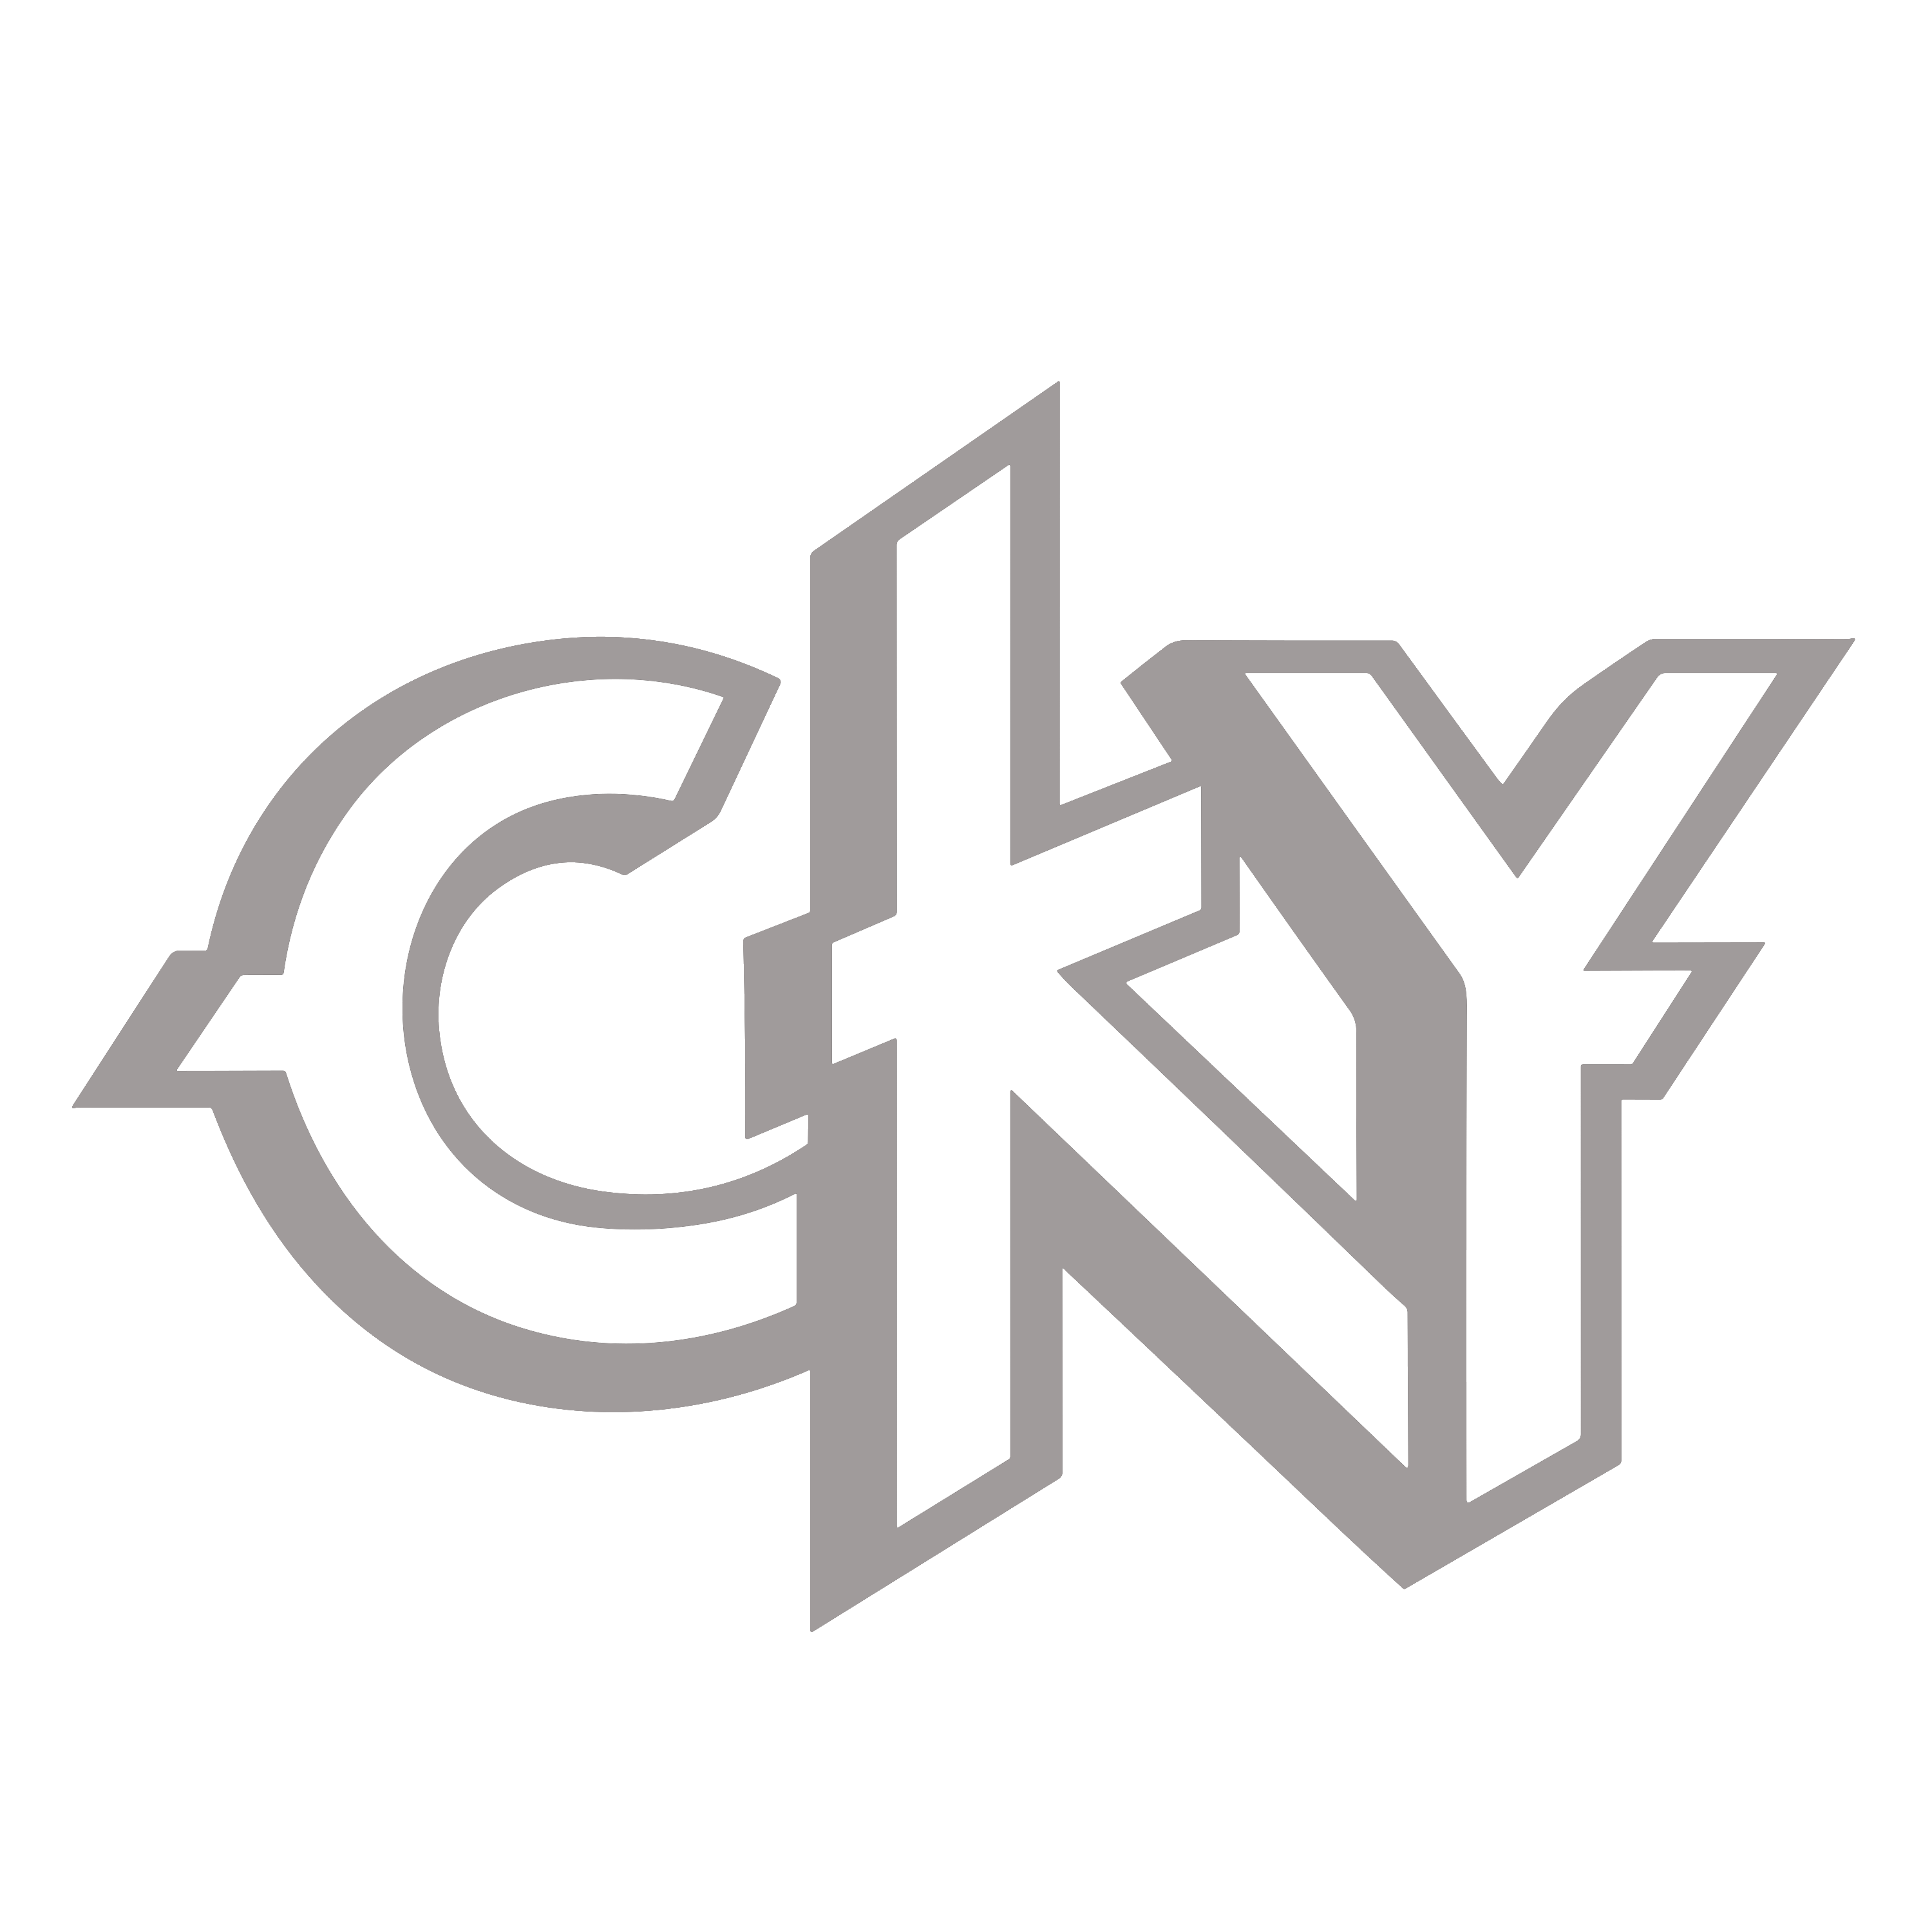 CKY Logo  Transparent Gallery